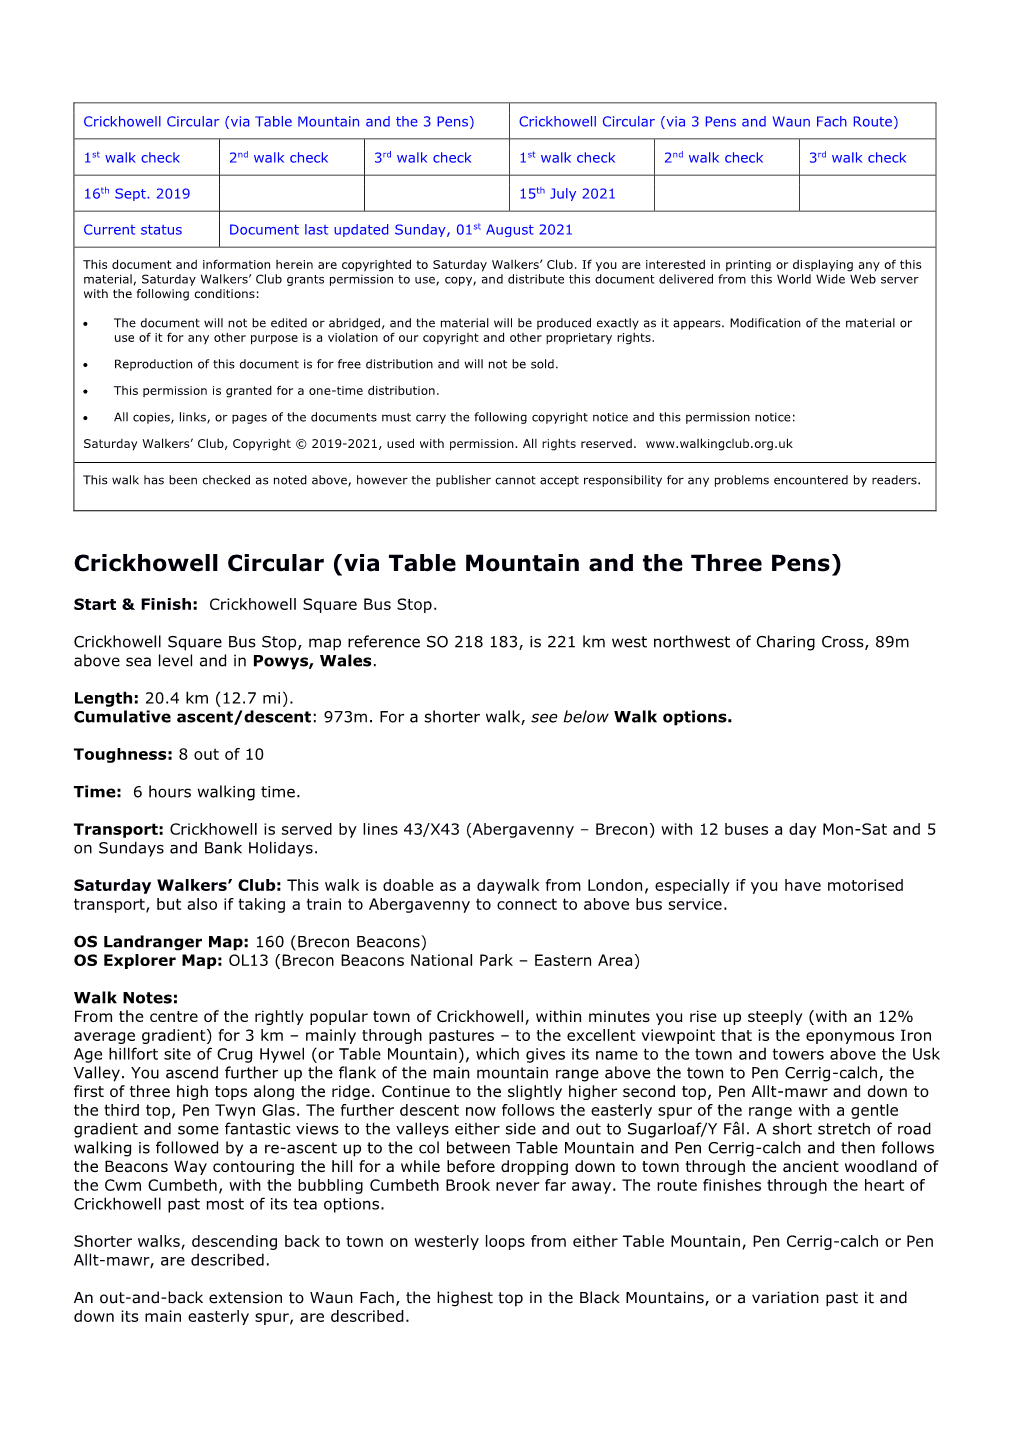 Crickhowell Circular (Via Table Mountain and the Three Pens)